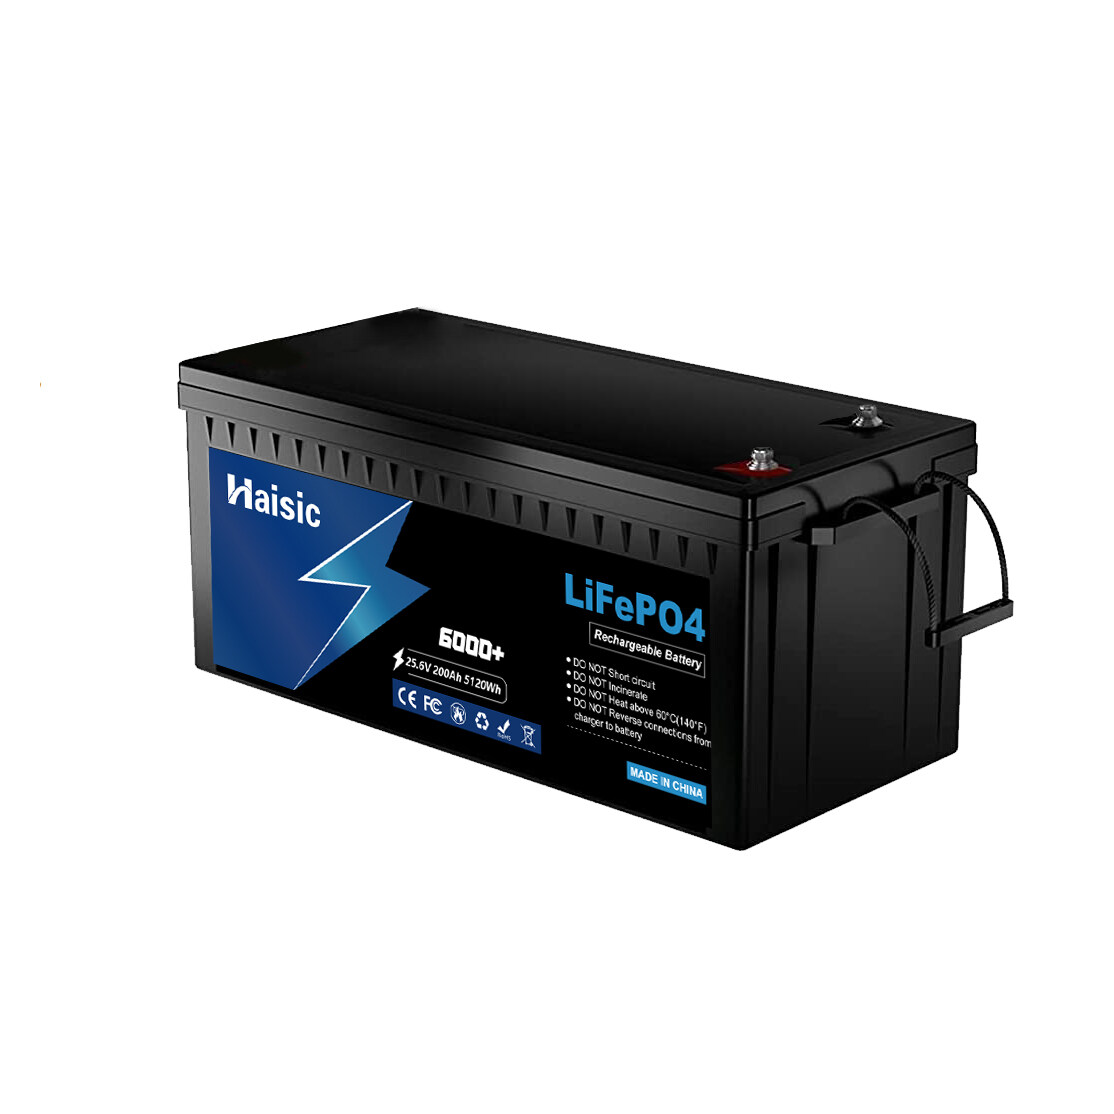 25.6V 5120Wh LifePO4 battery pack home solar energy storage lifepo4 battery